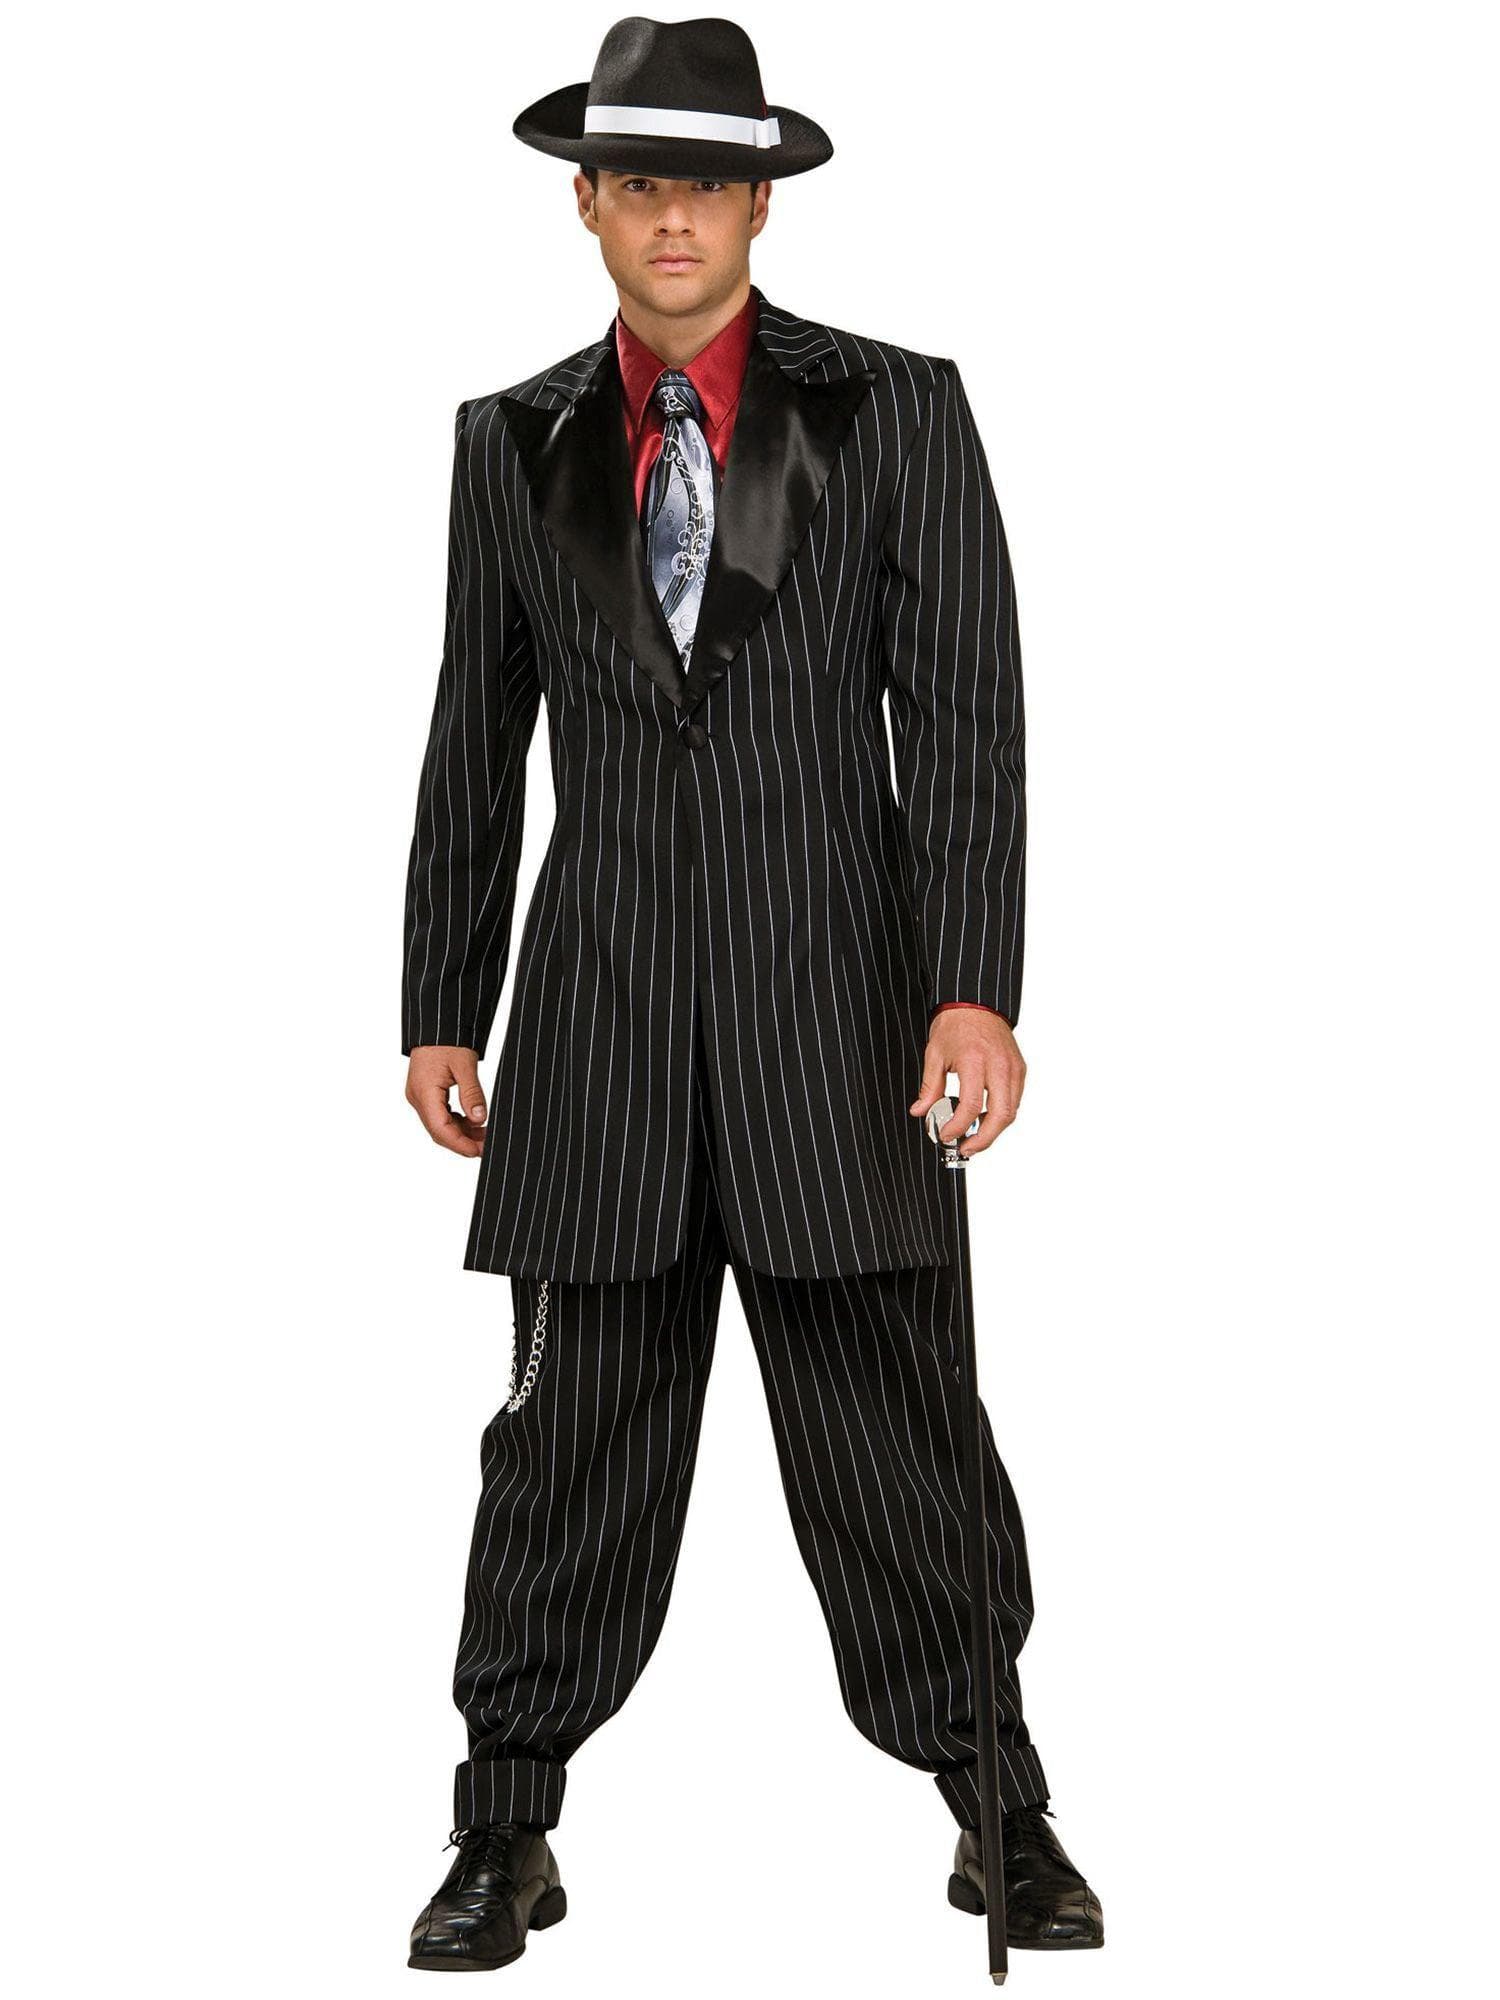 Adult Swankster Costume - costumes.com